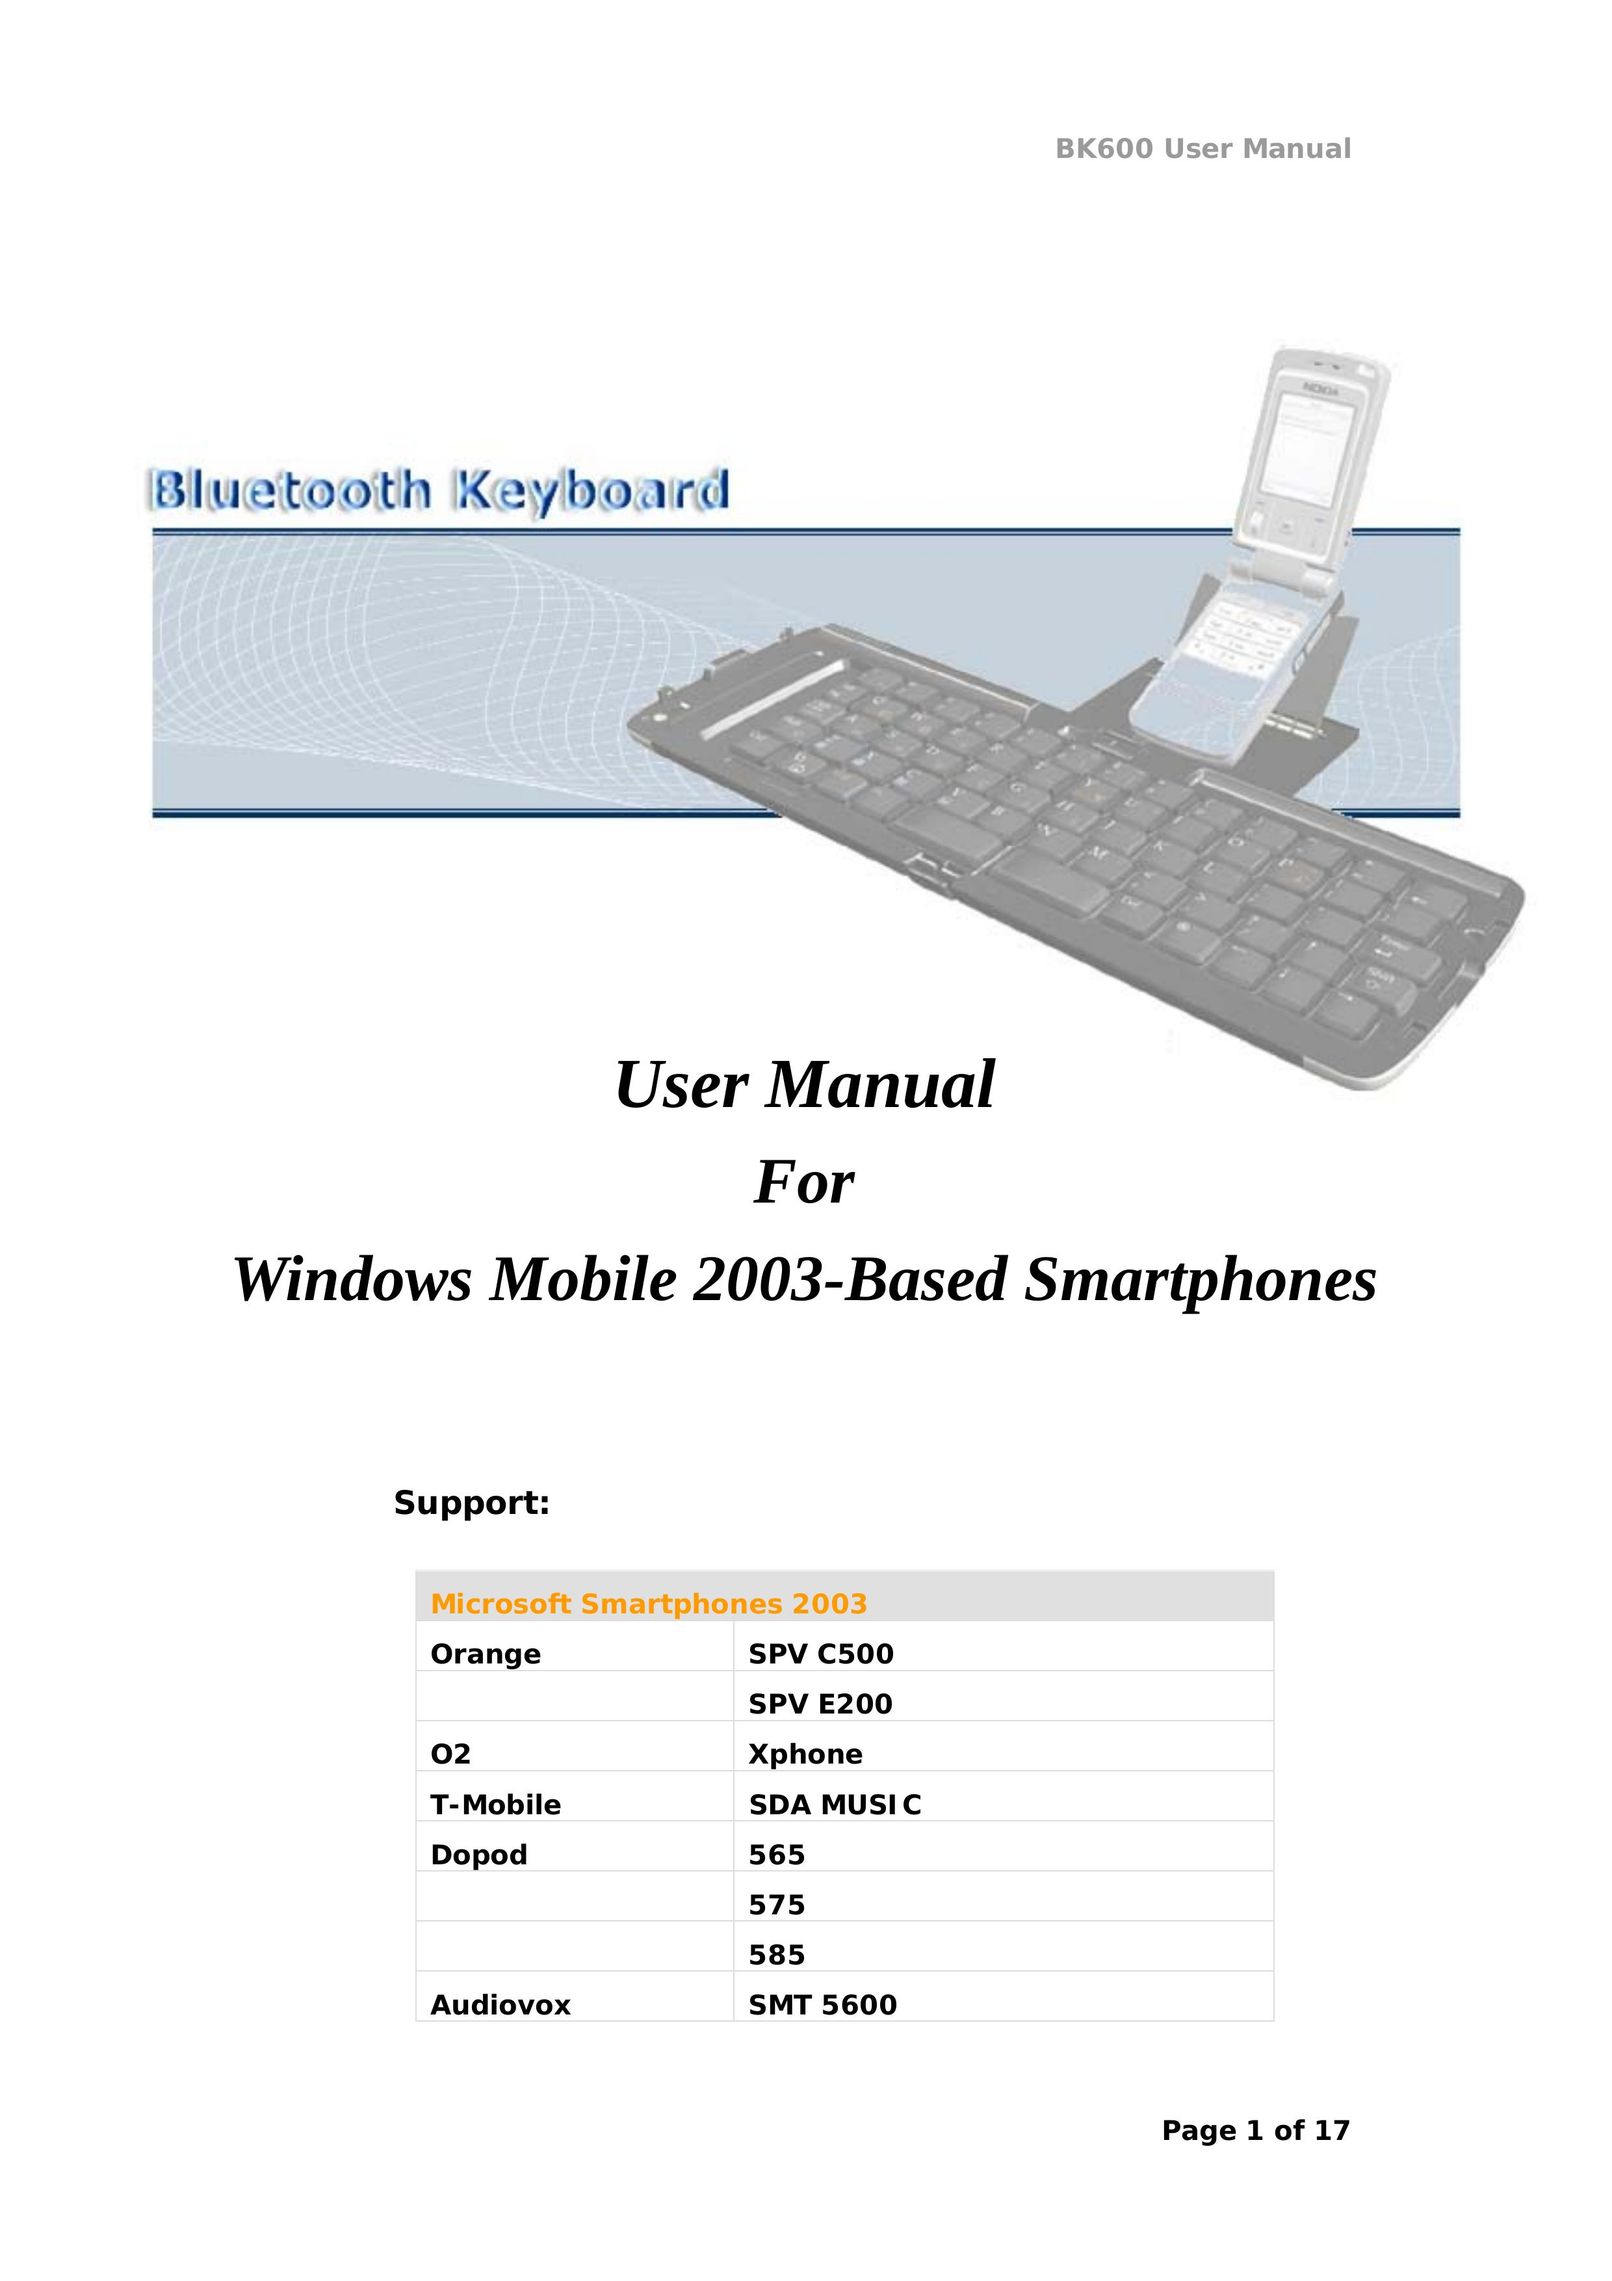 Microsoft BK600 Cell Phone User Manual